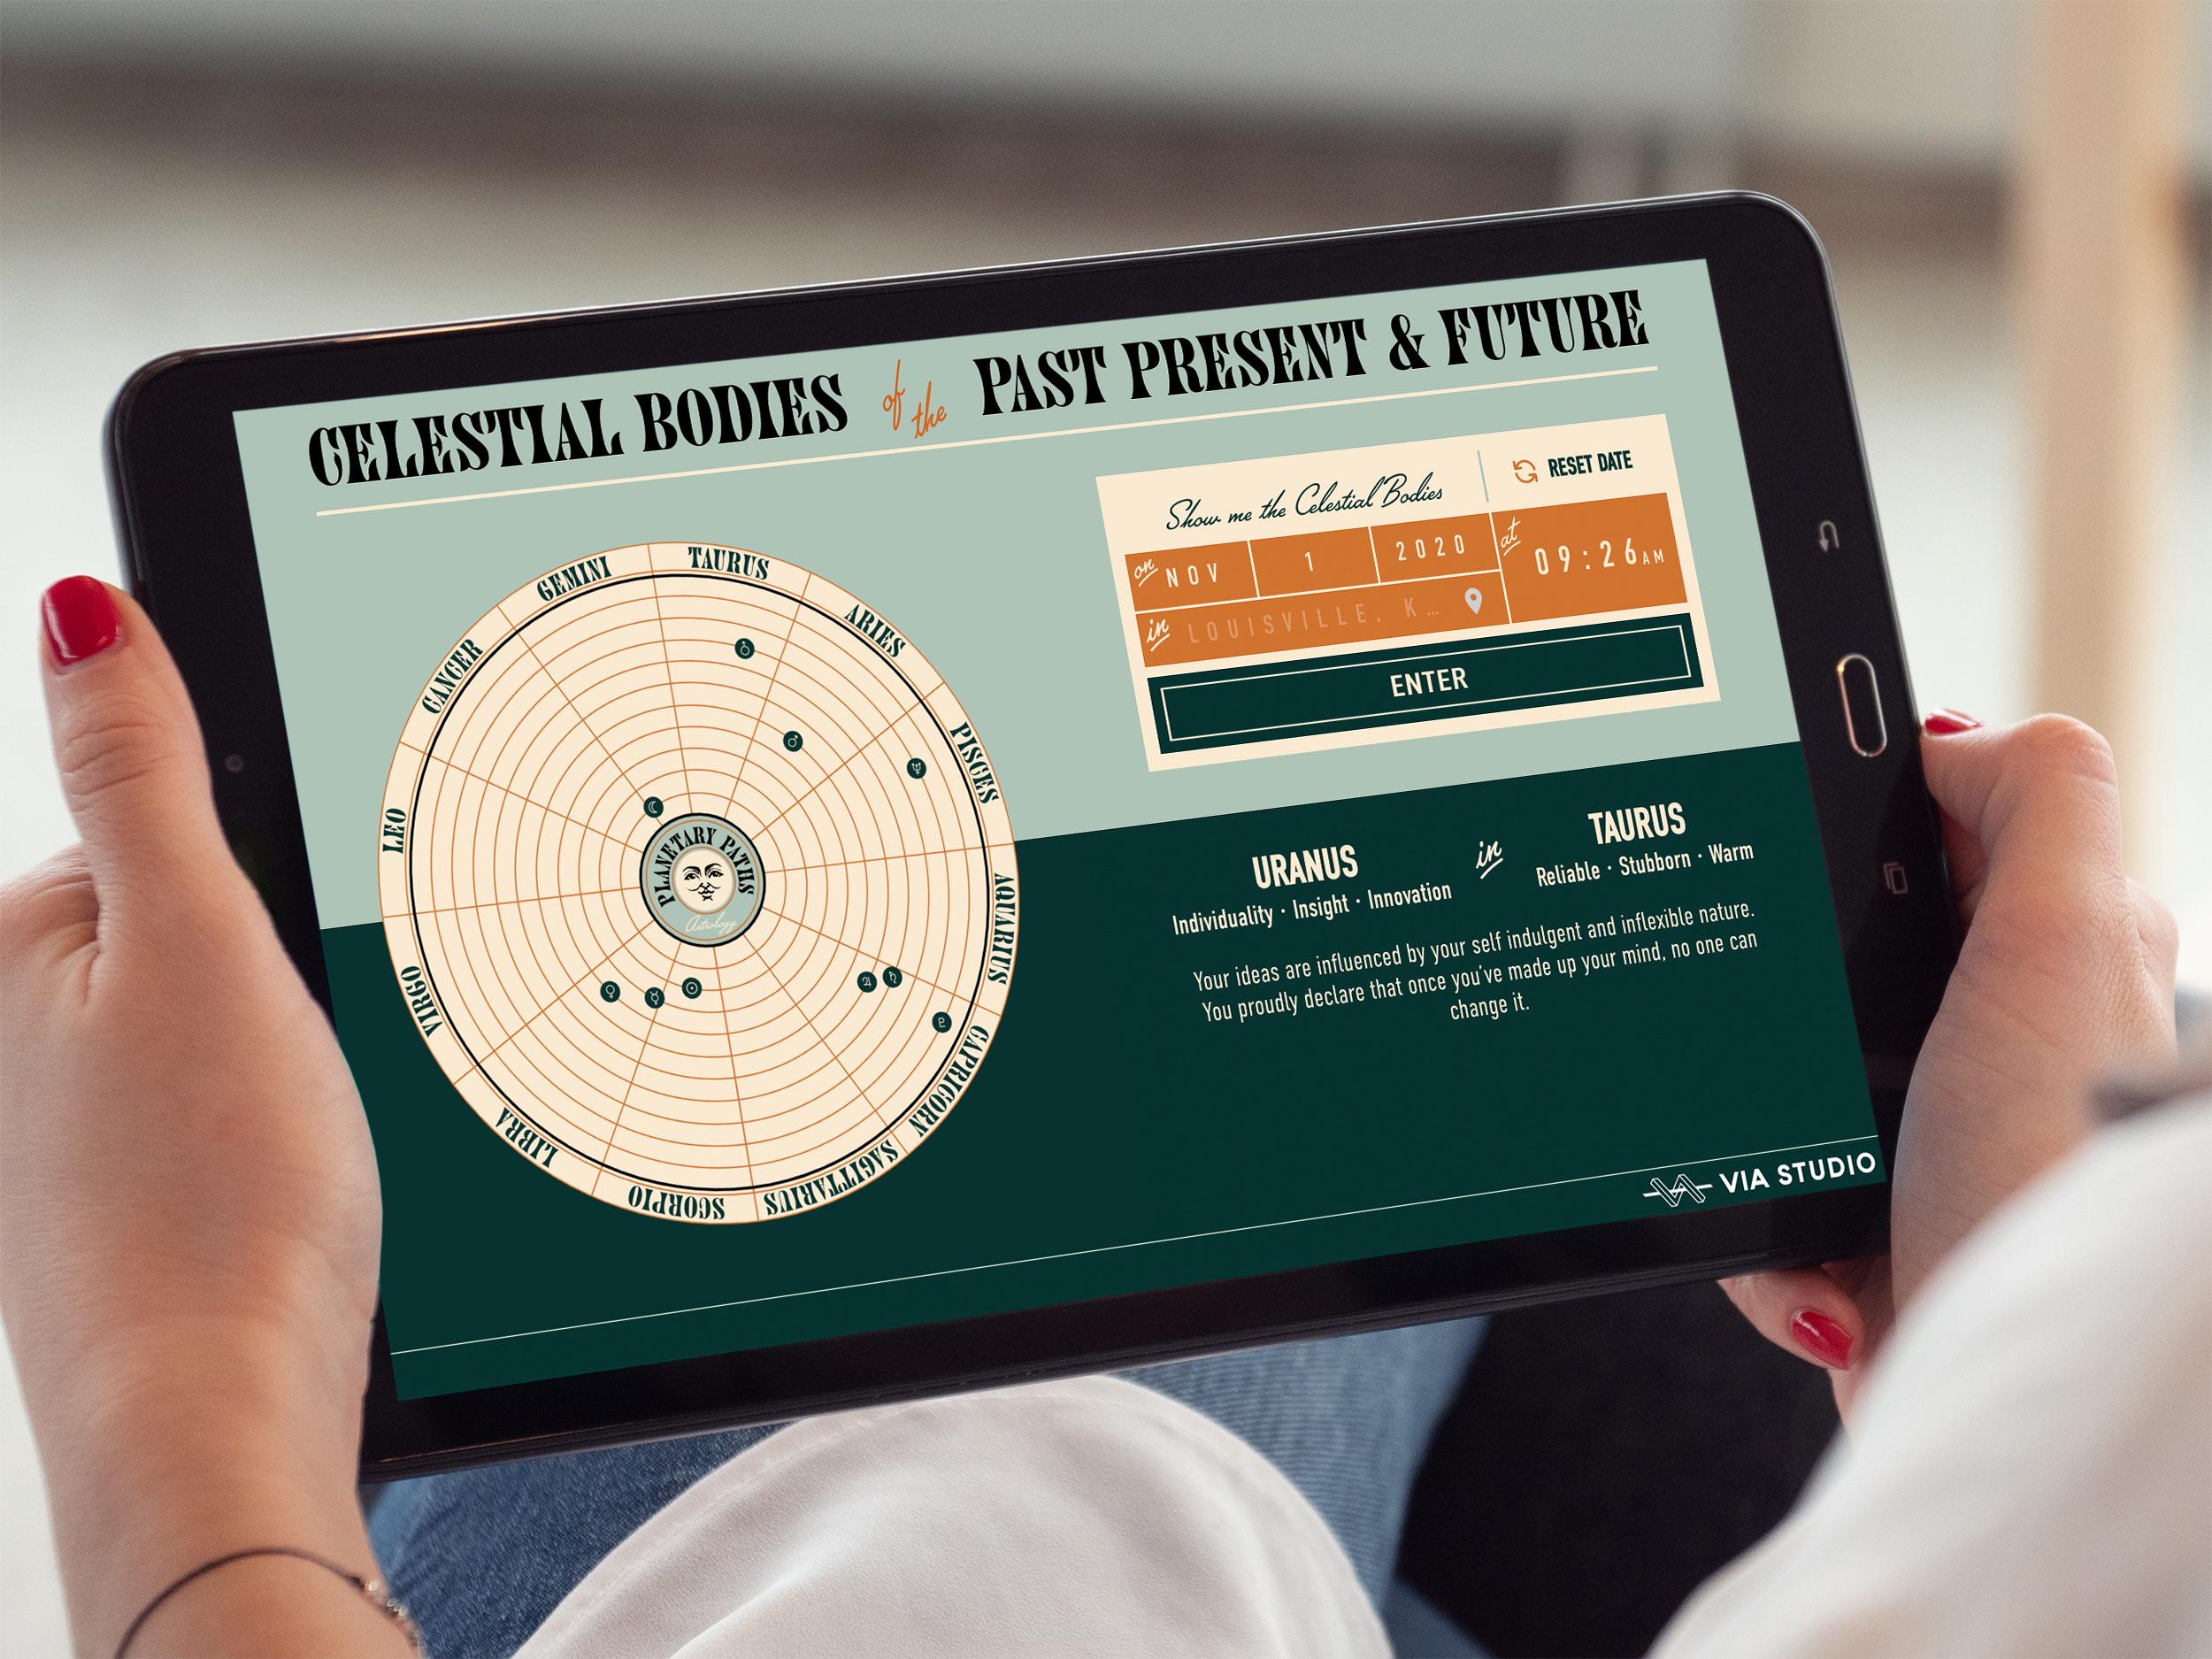 Celestial Bodies website design on a horizontal tablet.